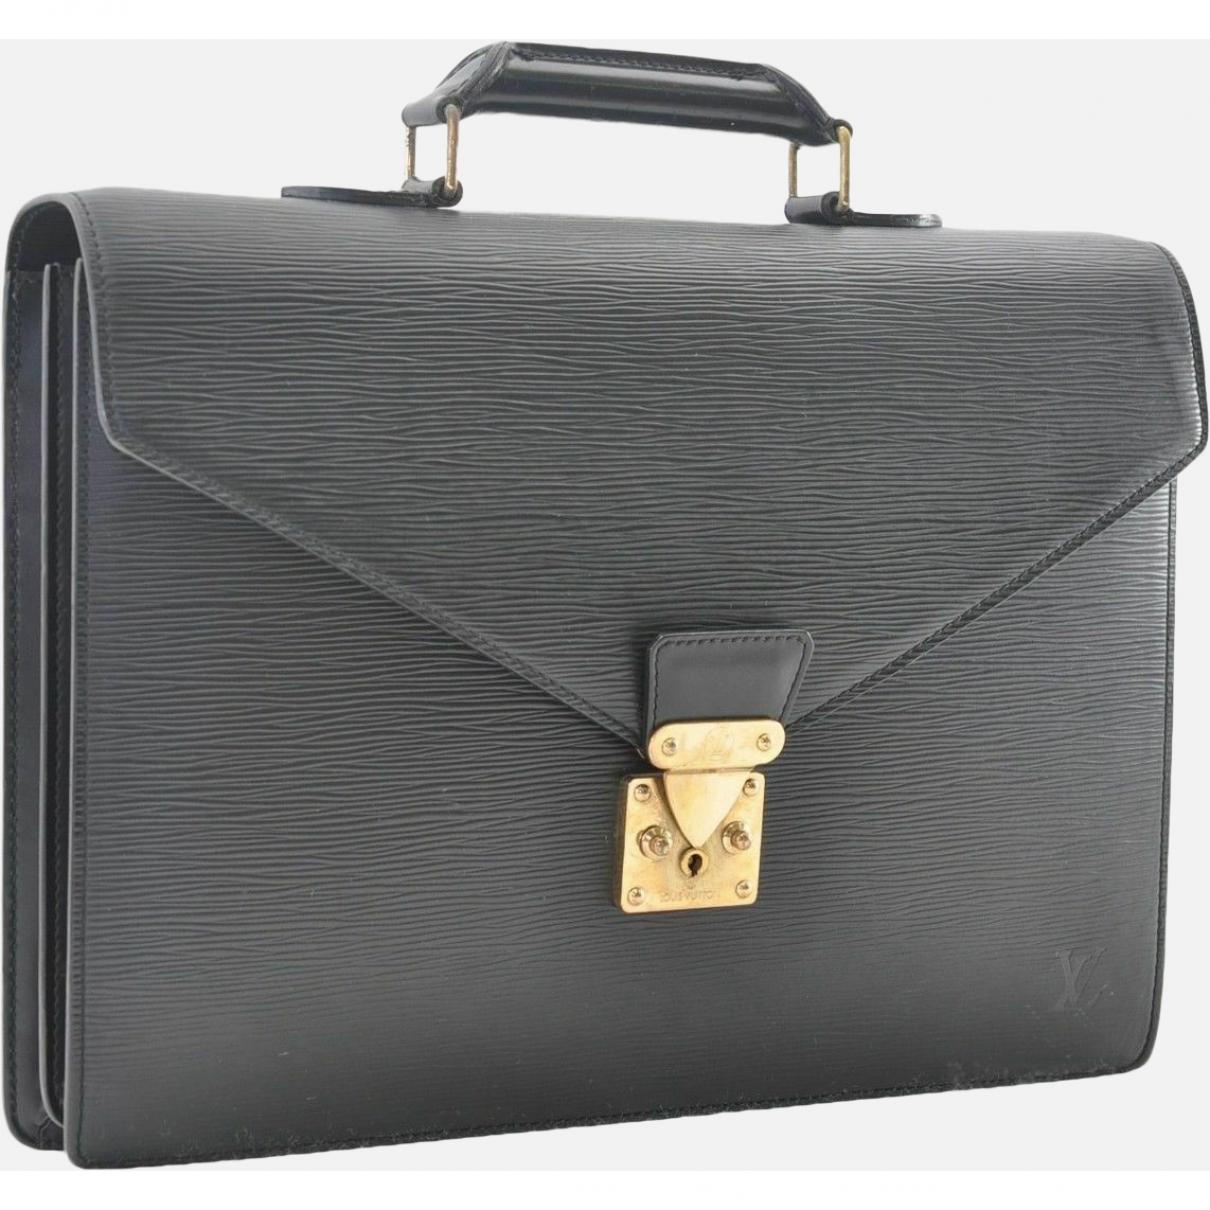 Lyst - Louis Vuitton Vintage Black Leather Handbag in Black